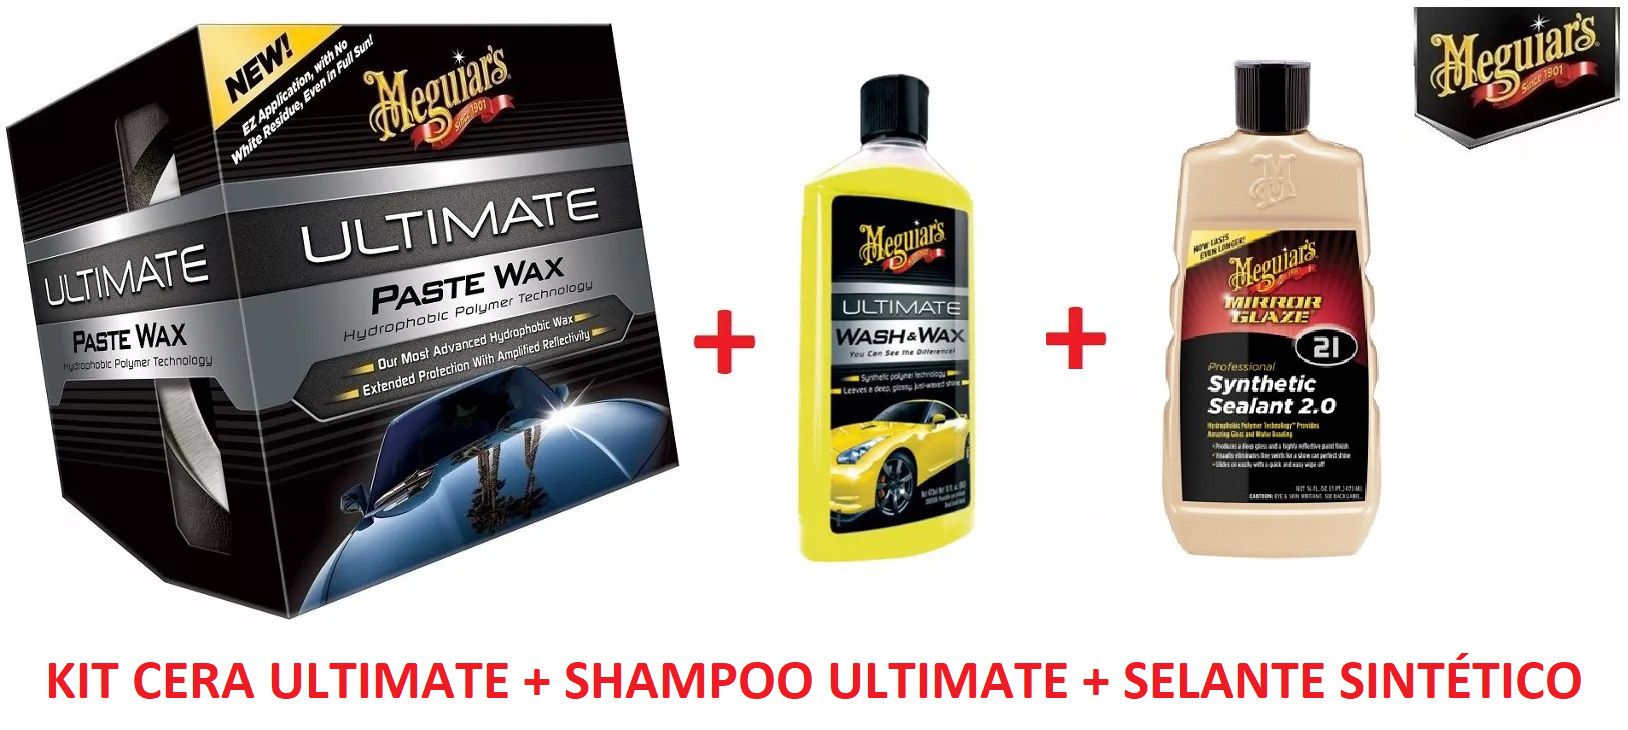 Kit Cera Ultimate Meguiars + 1 Shampoo Ultimate Meguiars + 1 Selante sintético 2.0 M2116